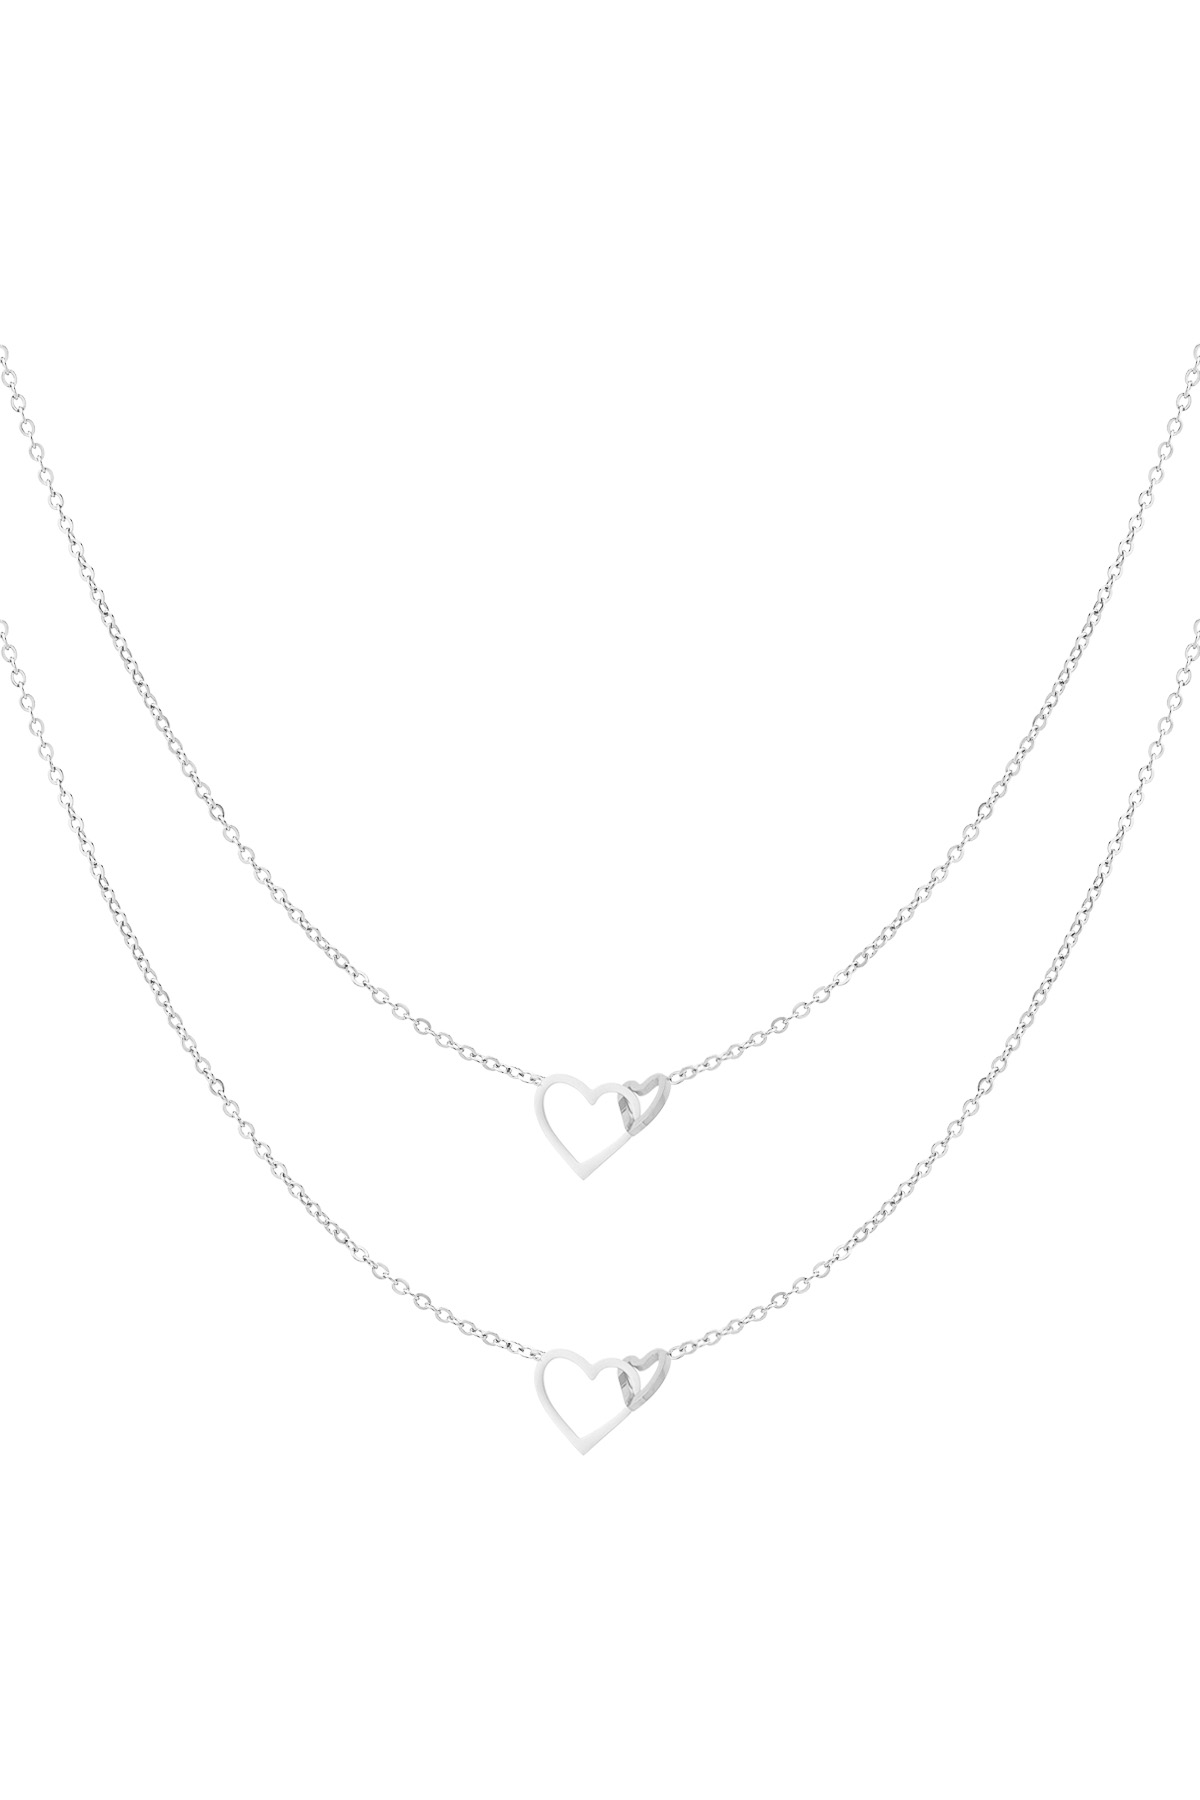 Eternal love necklace - silver